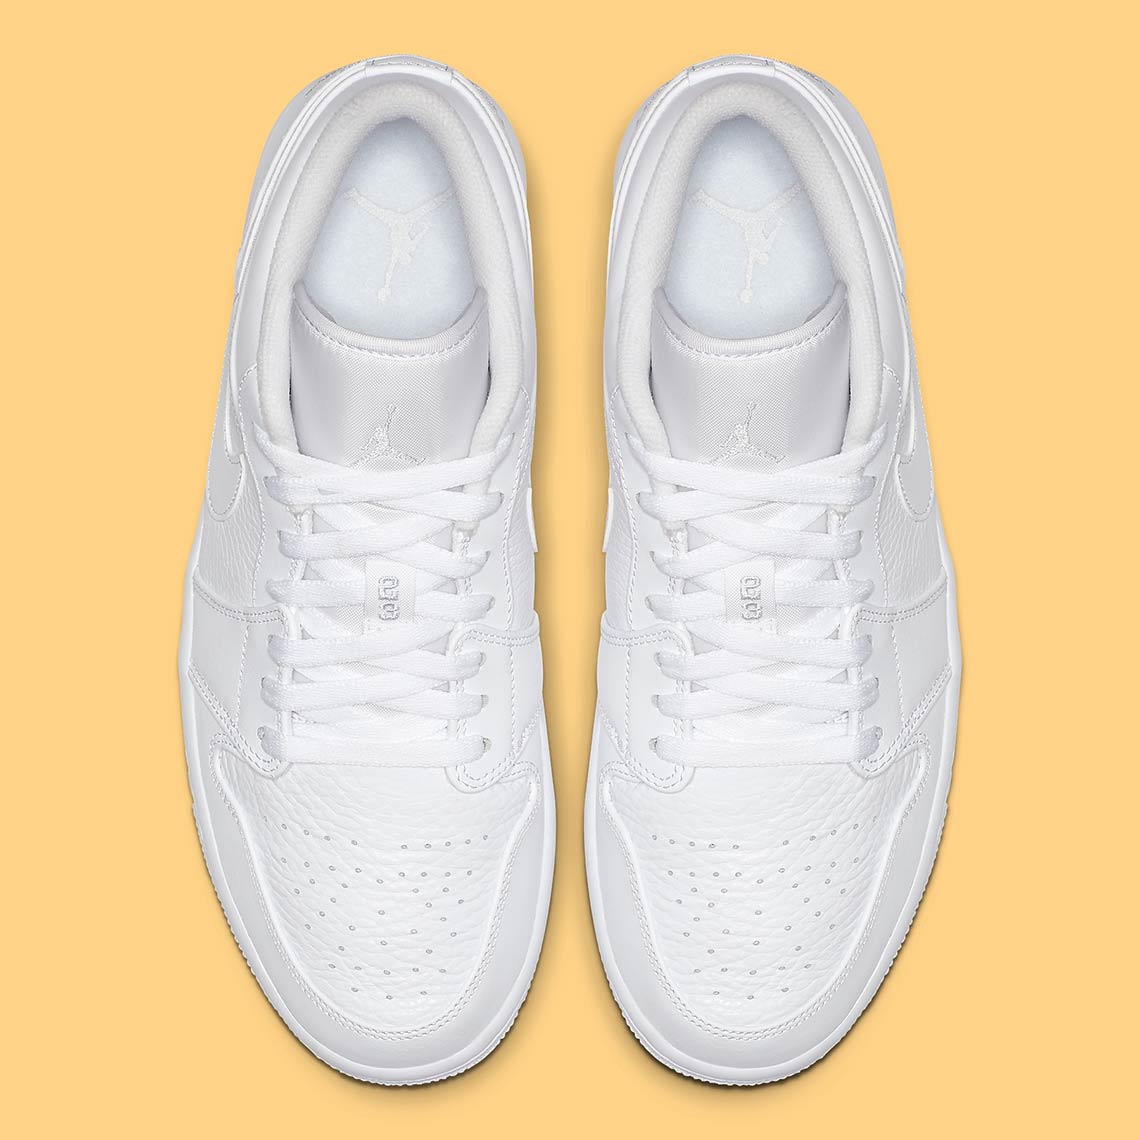 Jordan 1 Low All White 553558-111 Release Info | SneakerNews.com